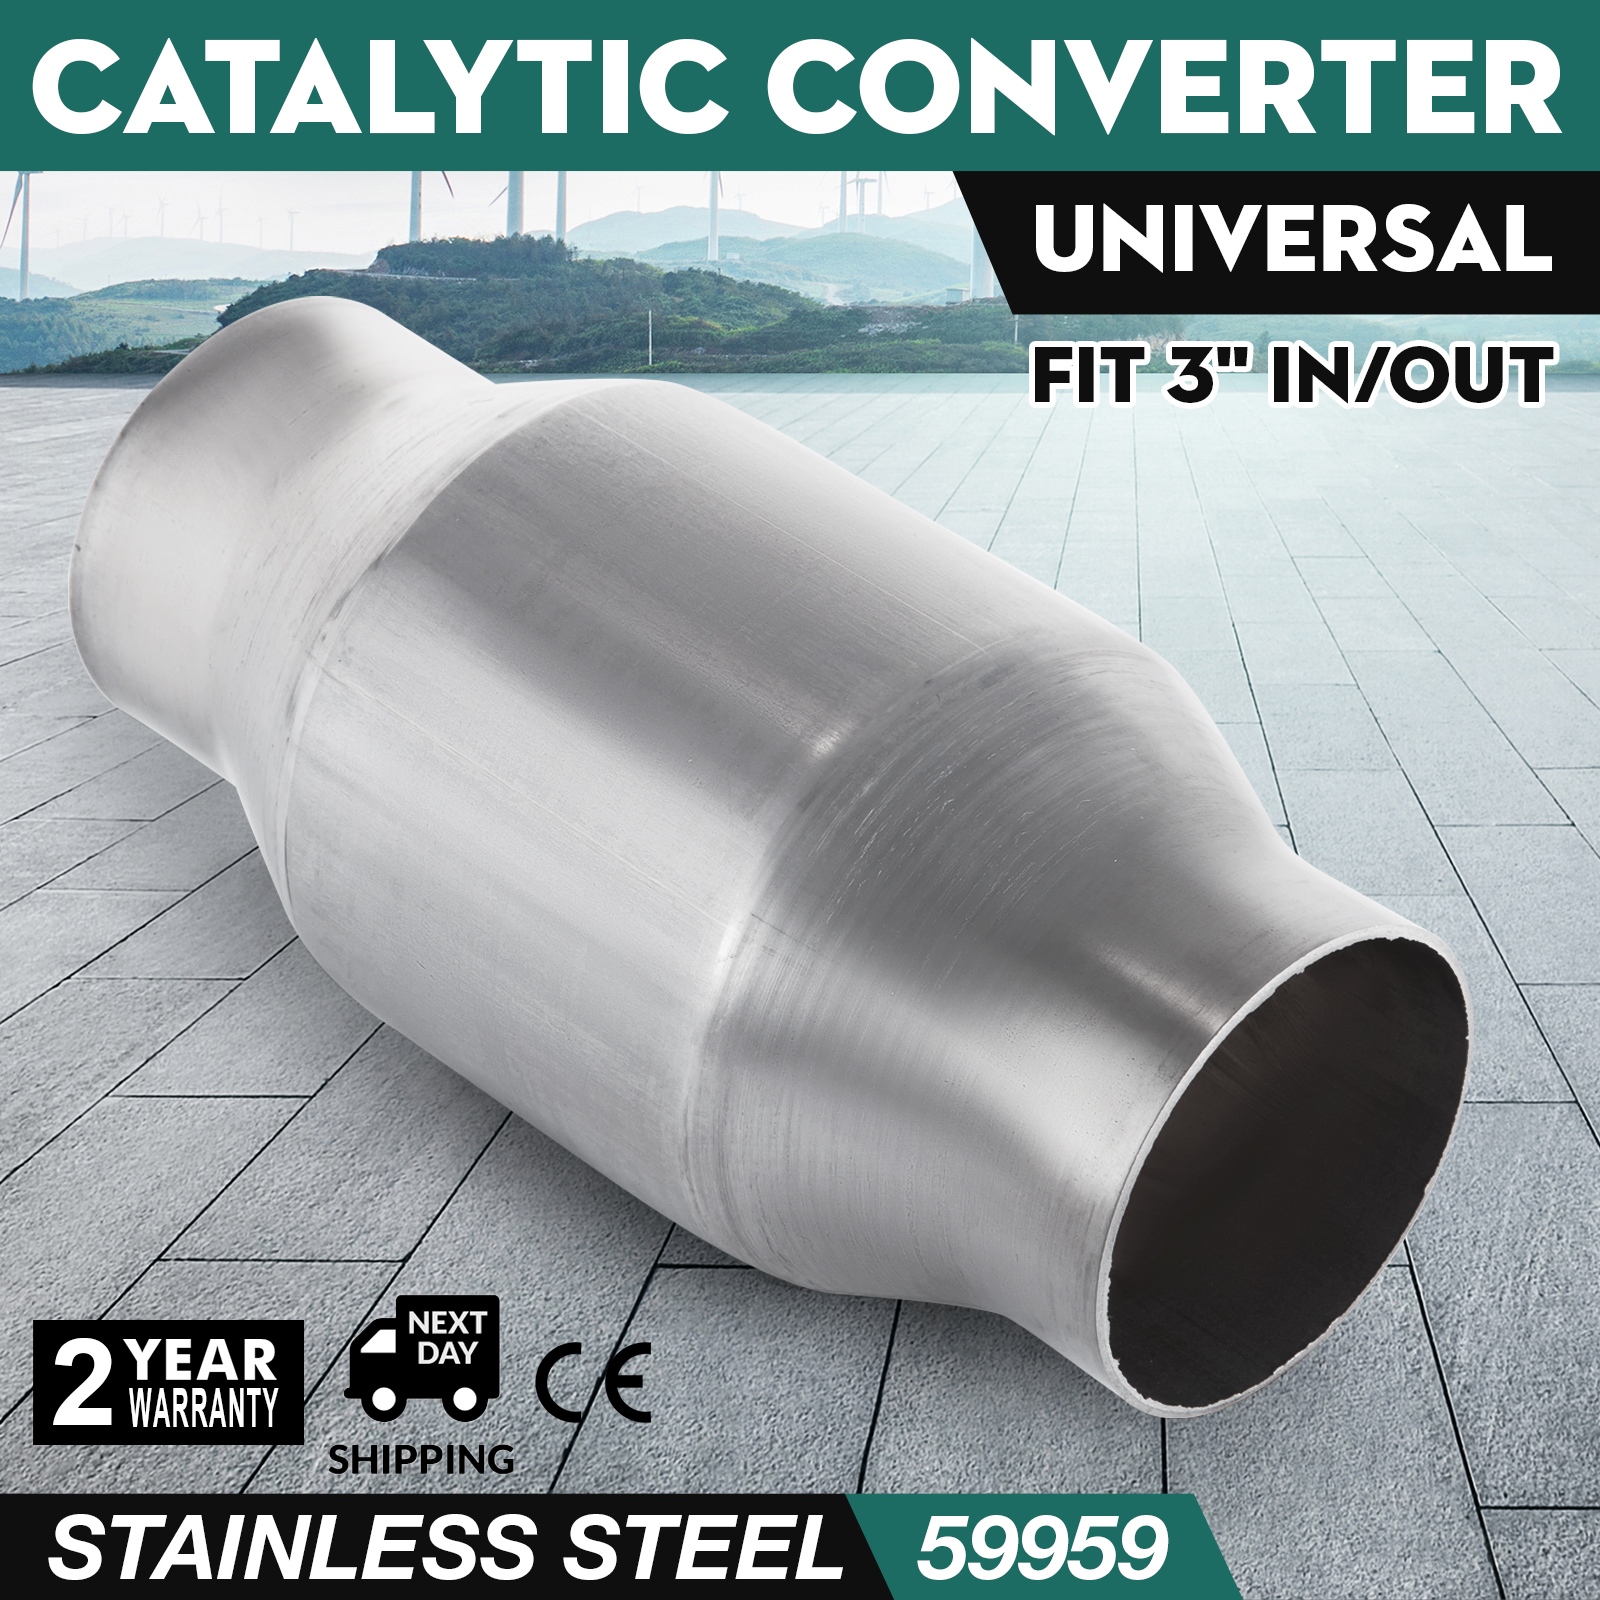 universal high flow catalytic converter